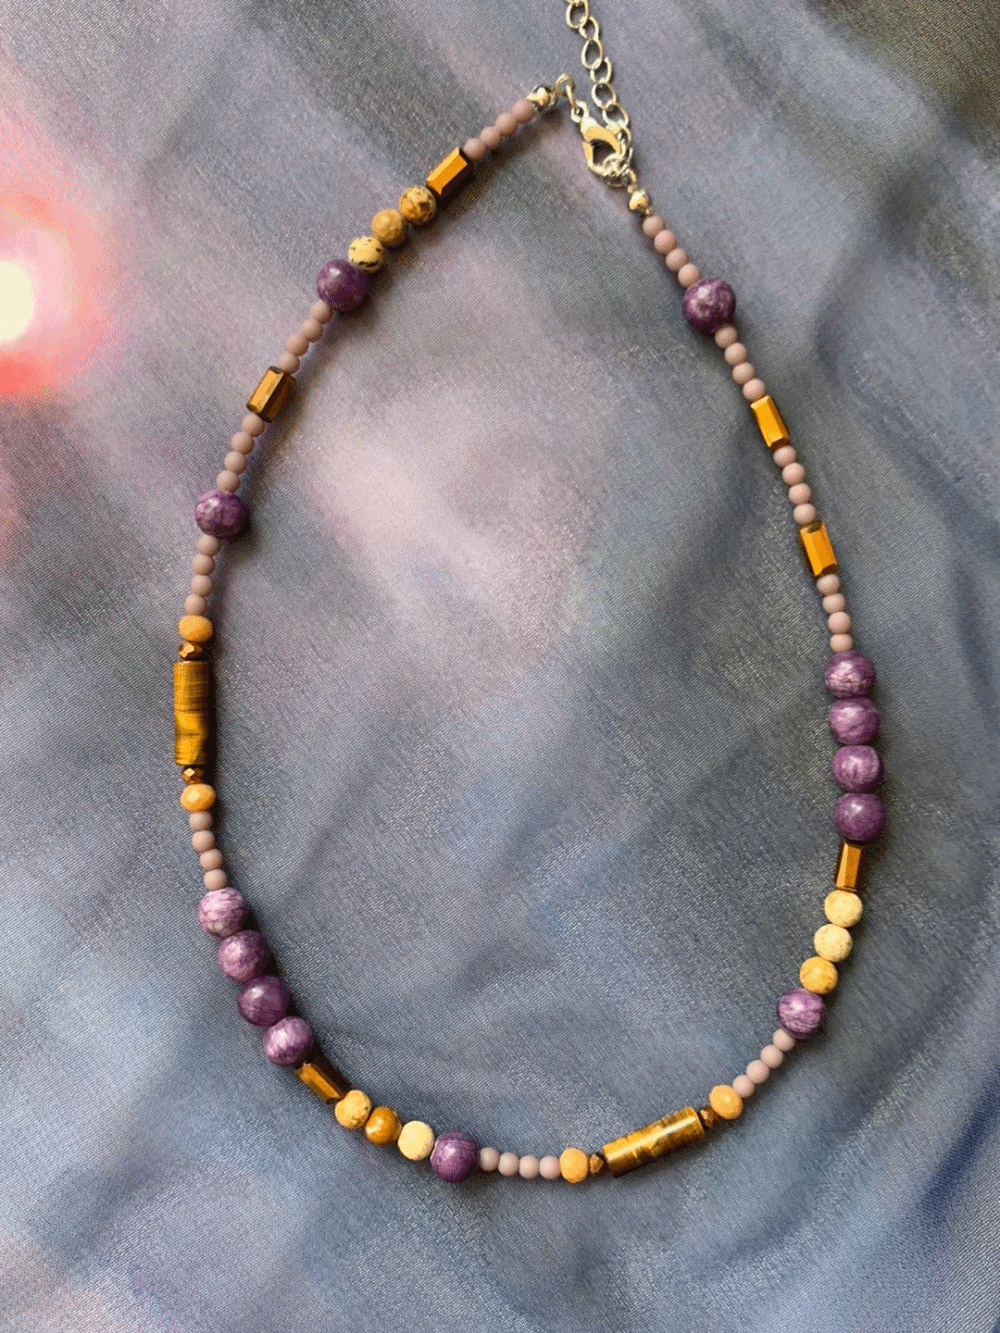 [Acc] Rita hippy necklace / one color